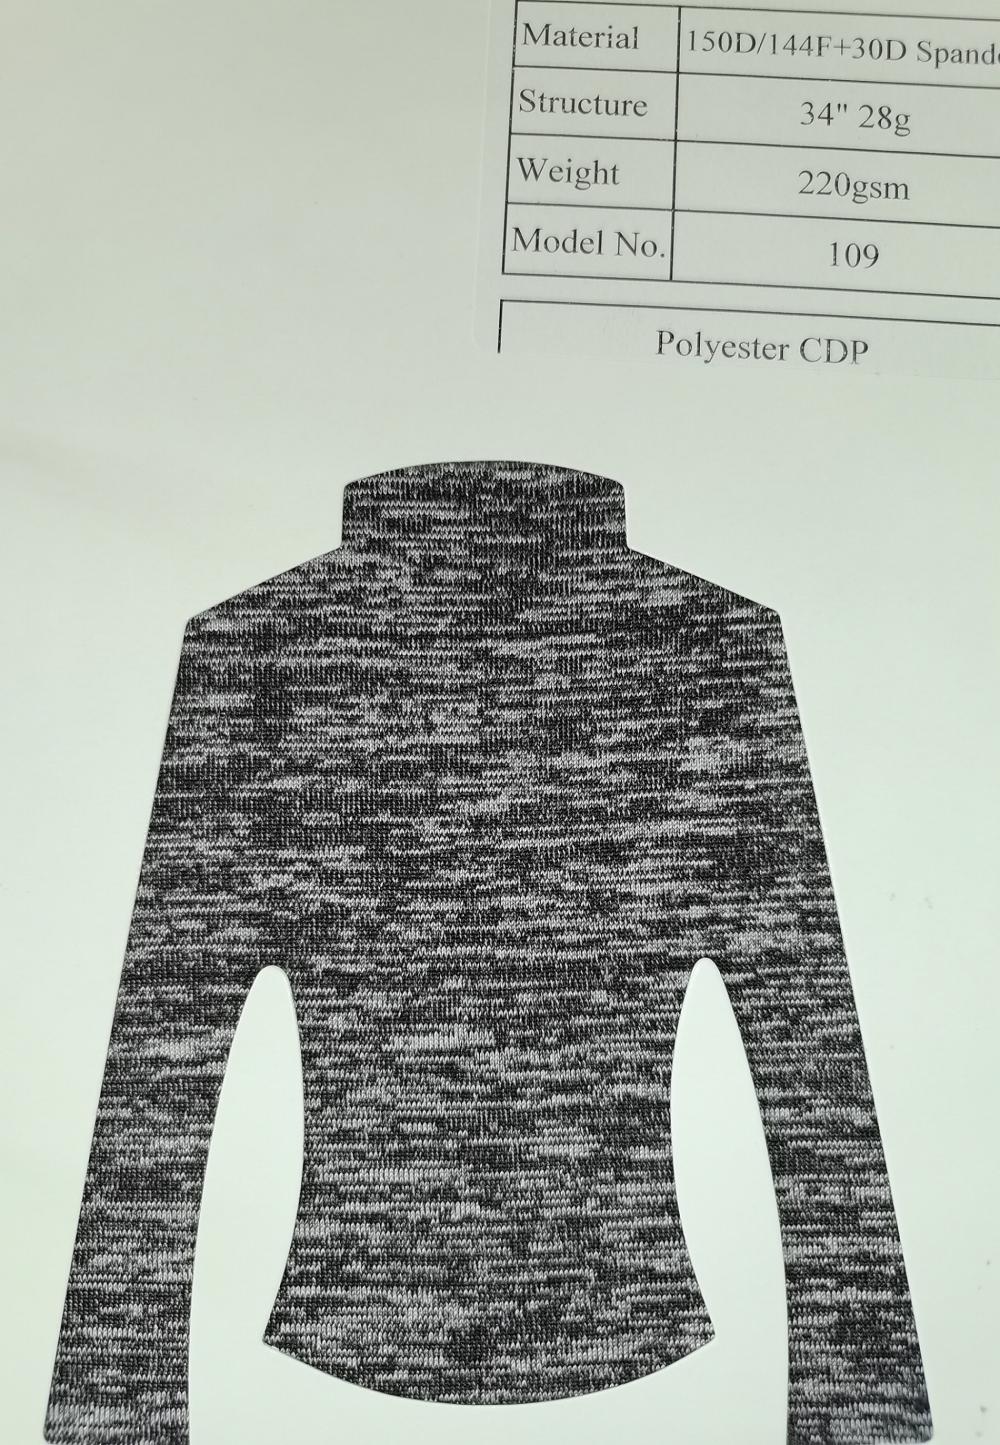 Polyester Draw Texturing Garn CDP